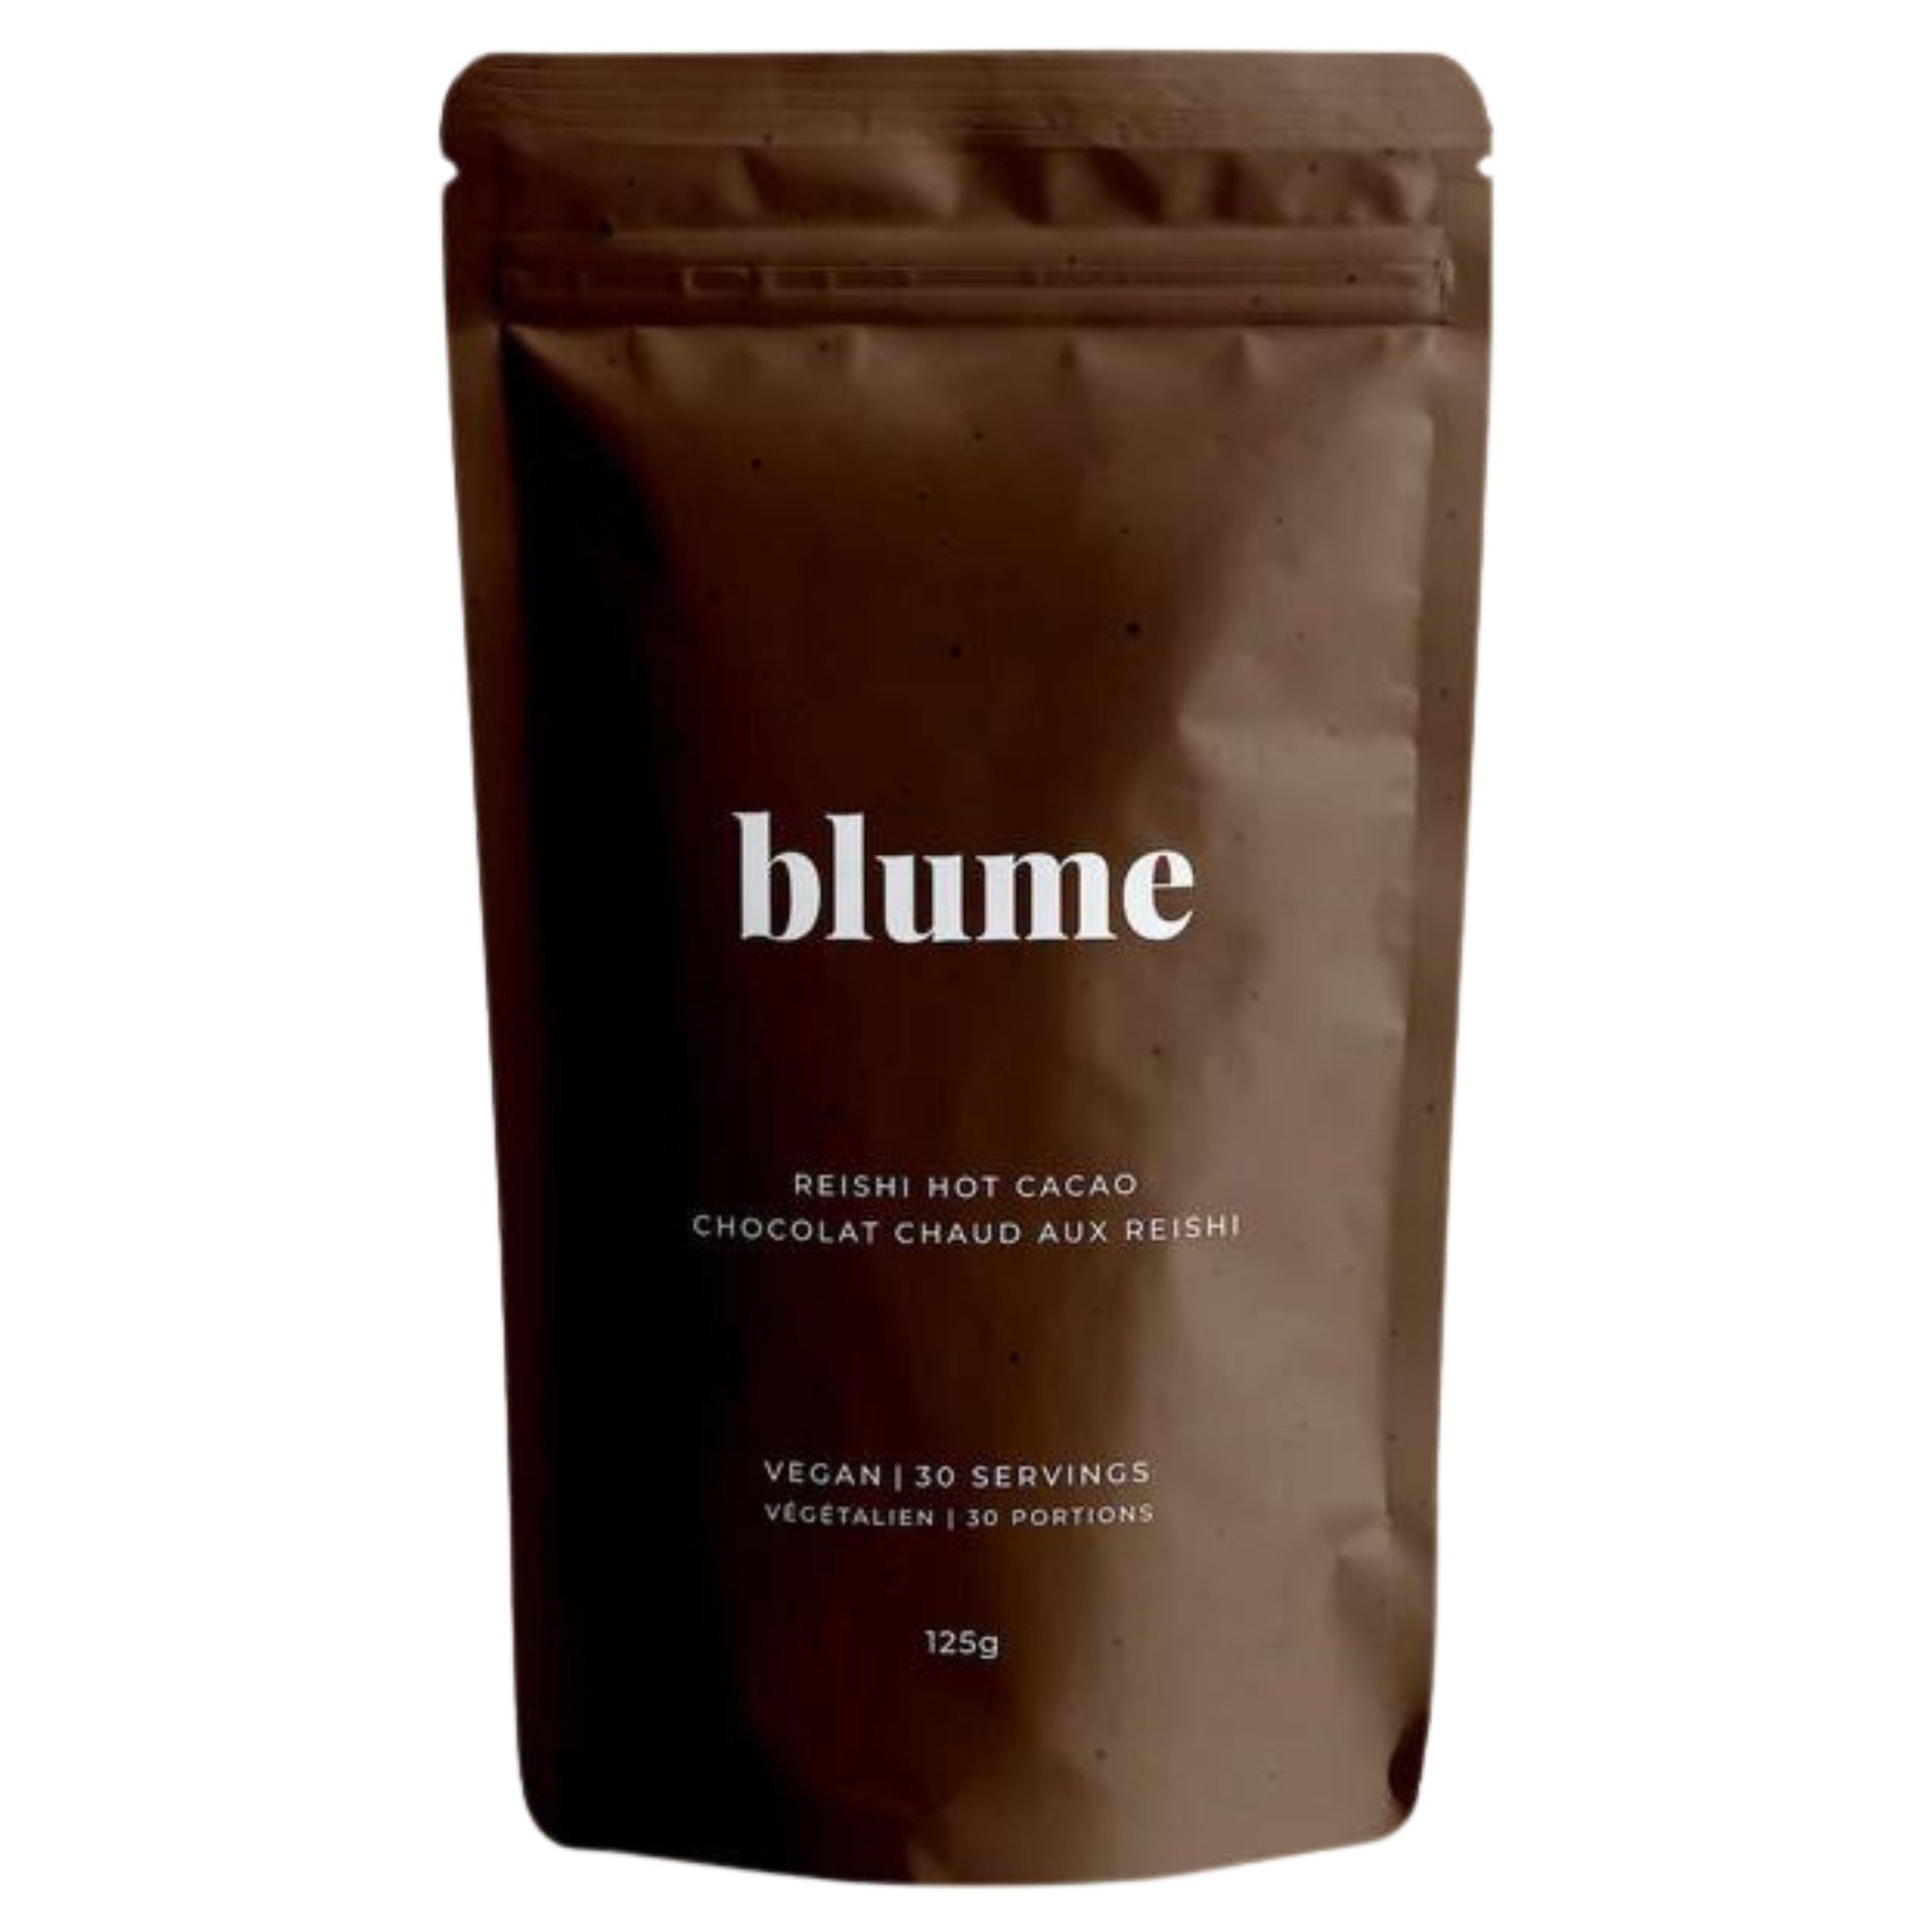 Blume Reishi Hot Cacao Blend 125g bag - Vegan - 30 Servings per bag. 